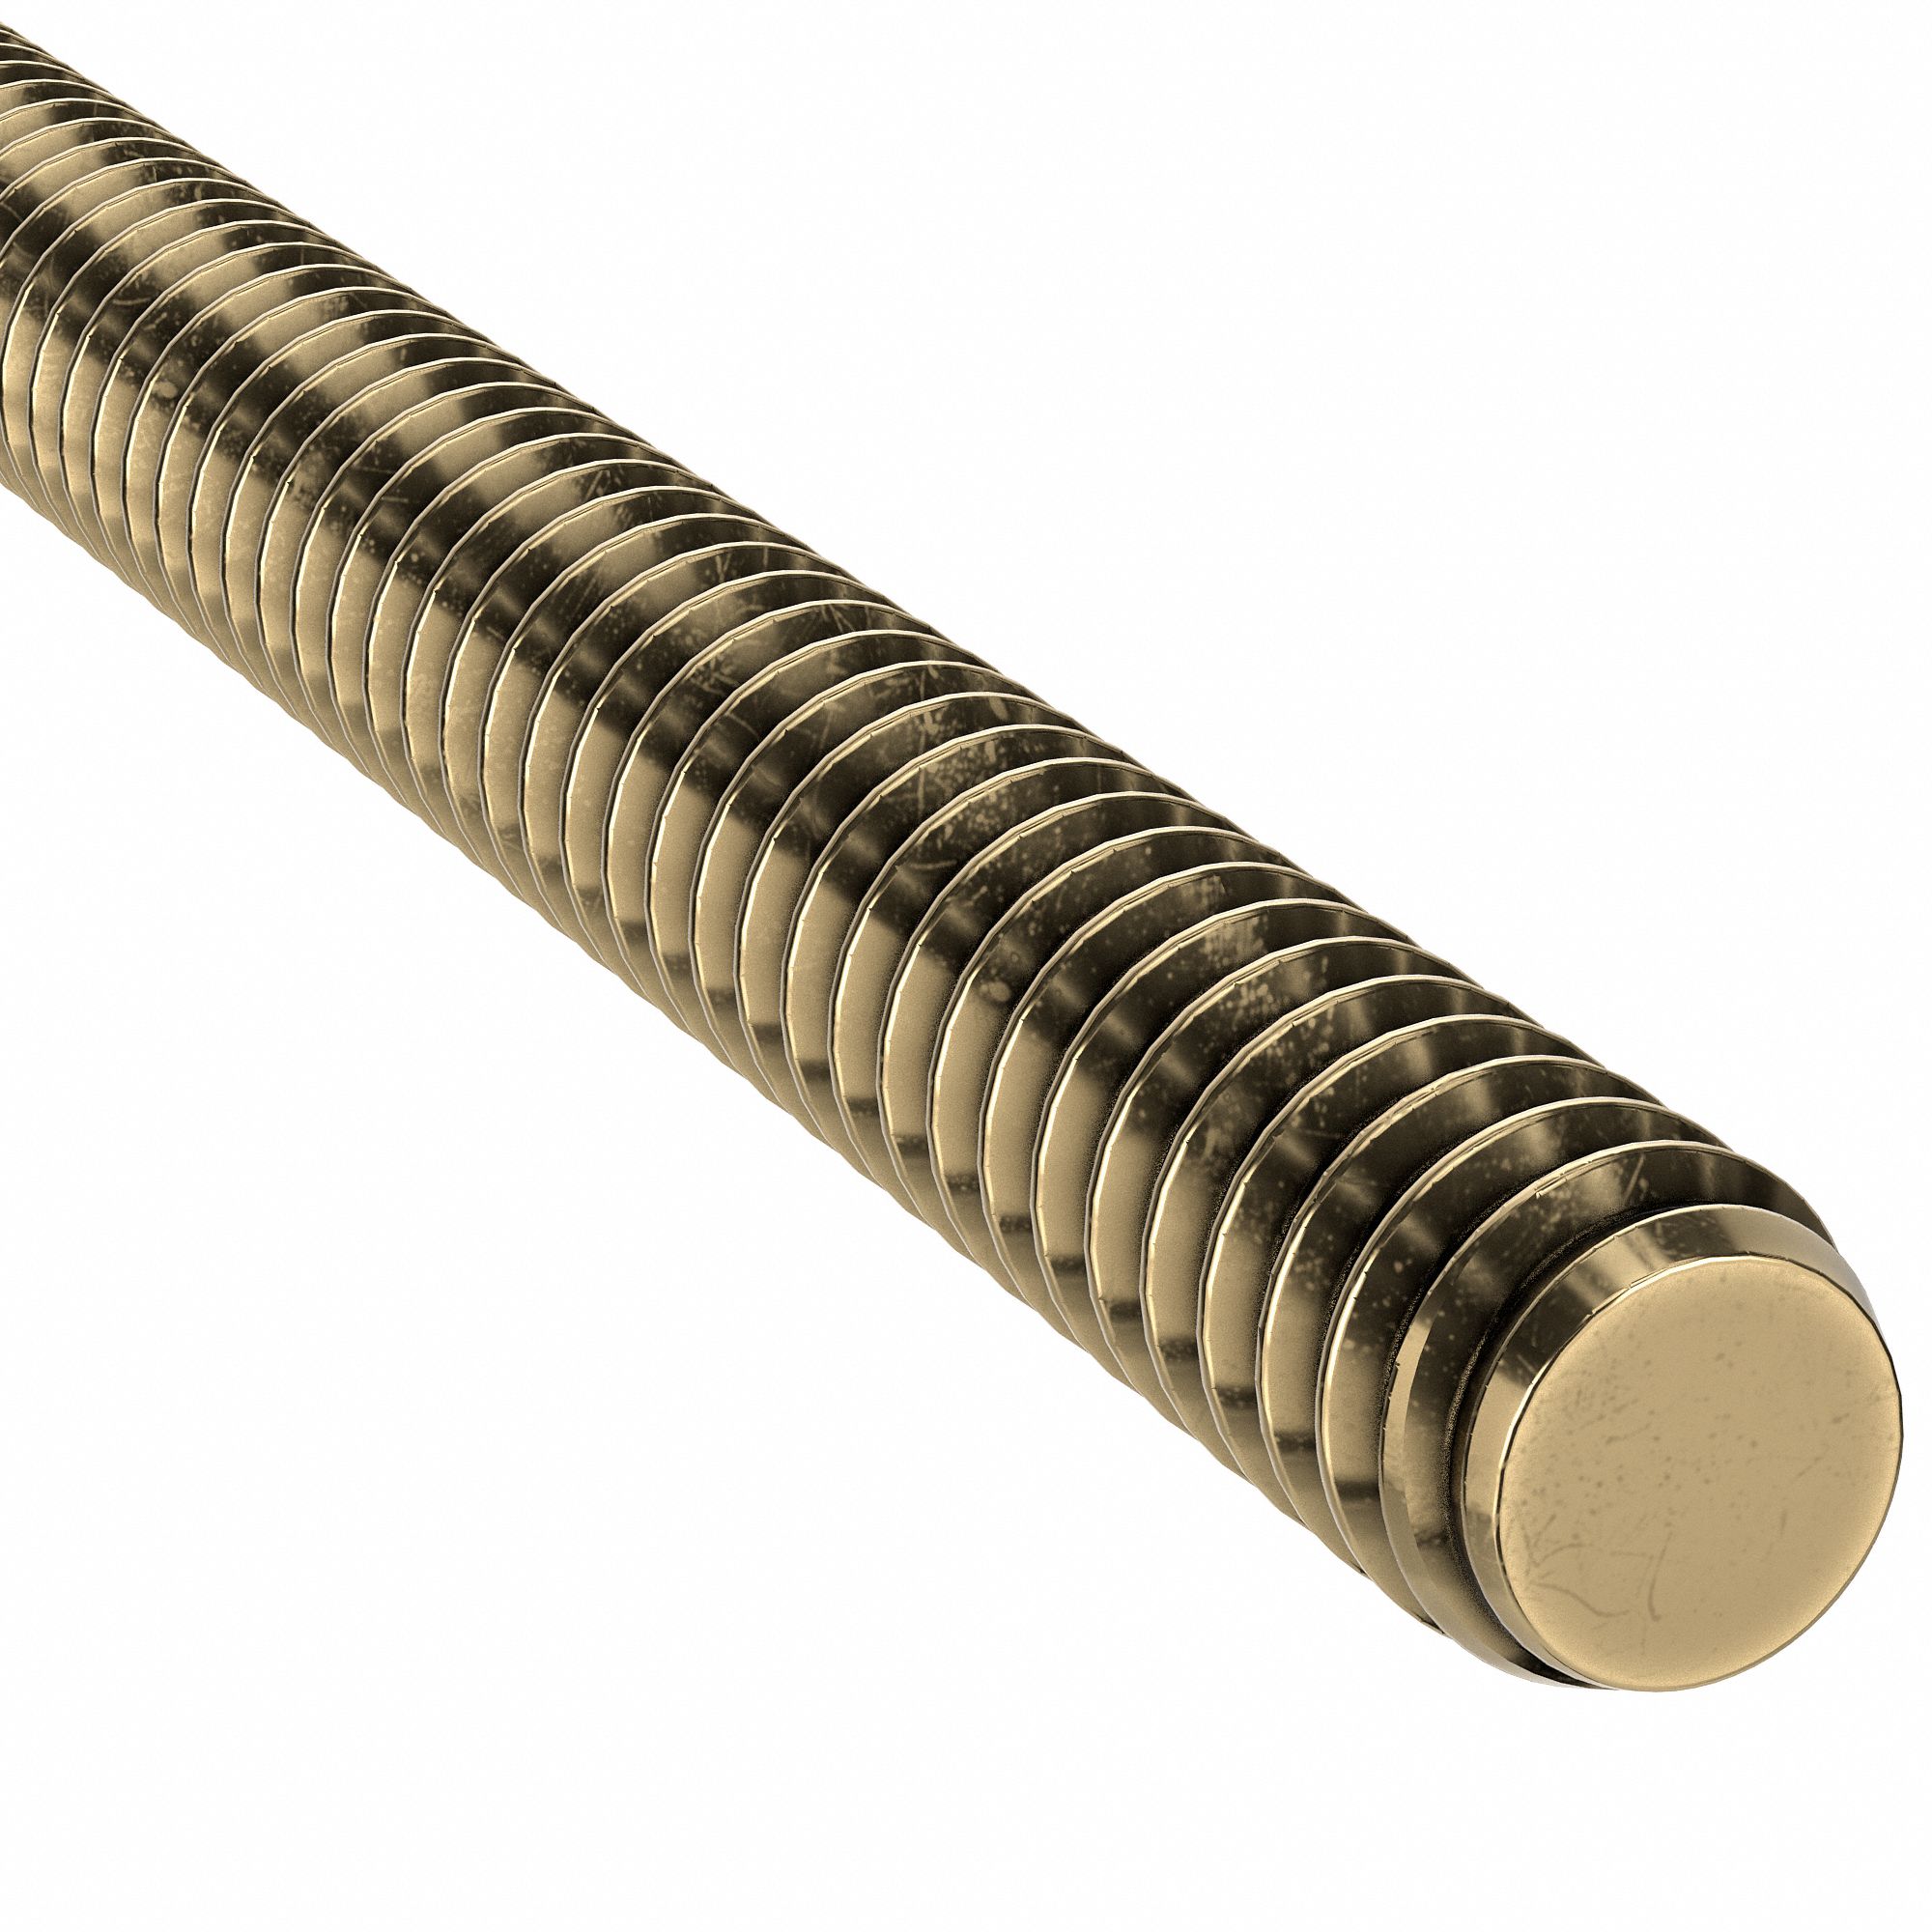 7/8-9 Thread Size Low-Strength Zinc-Plated Steel Threaded Rod 3 Feet Long 